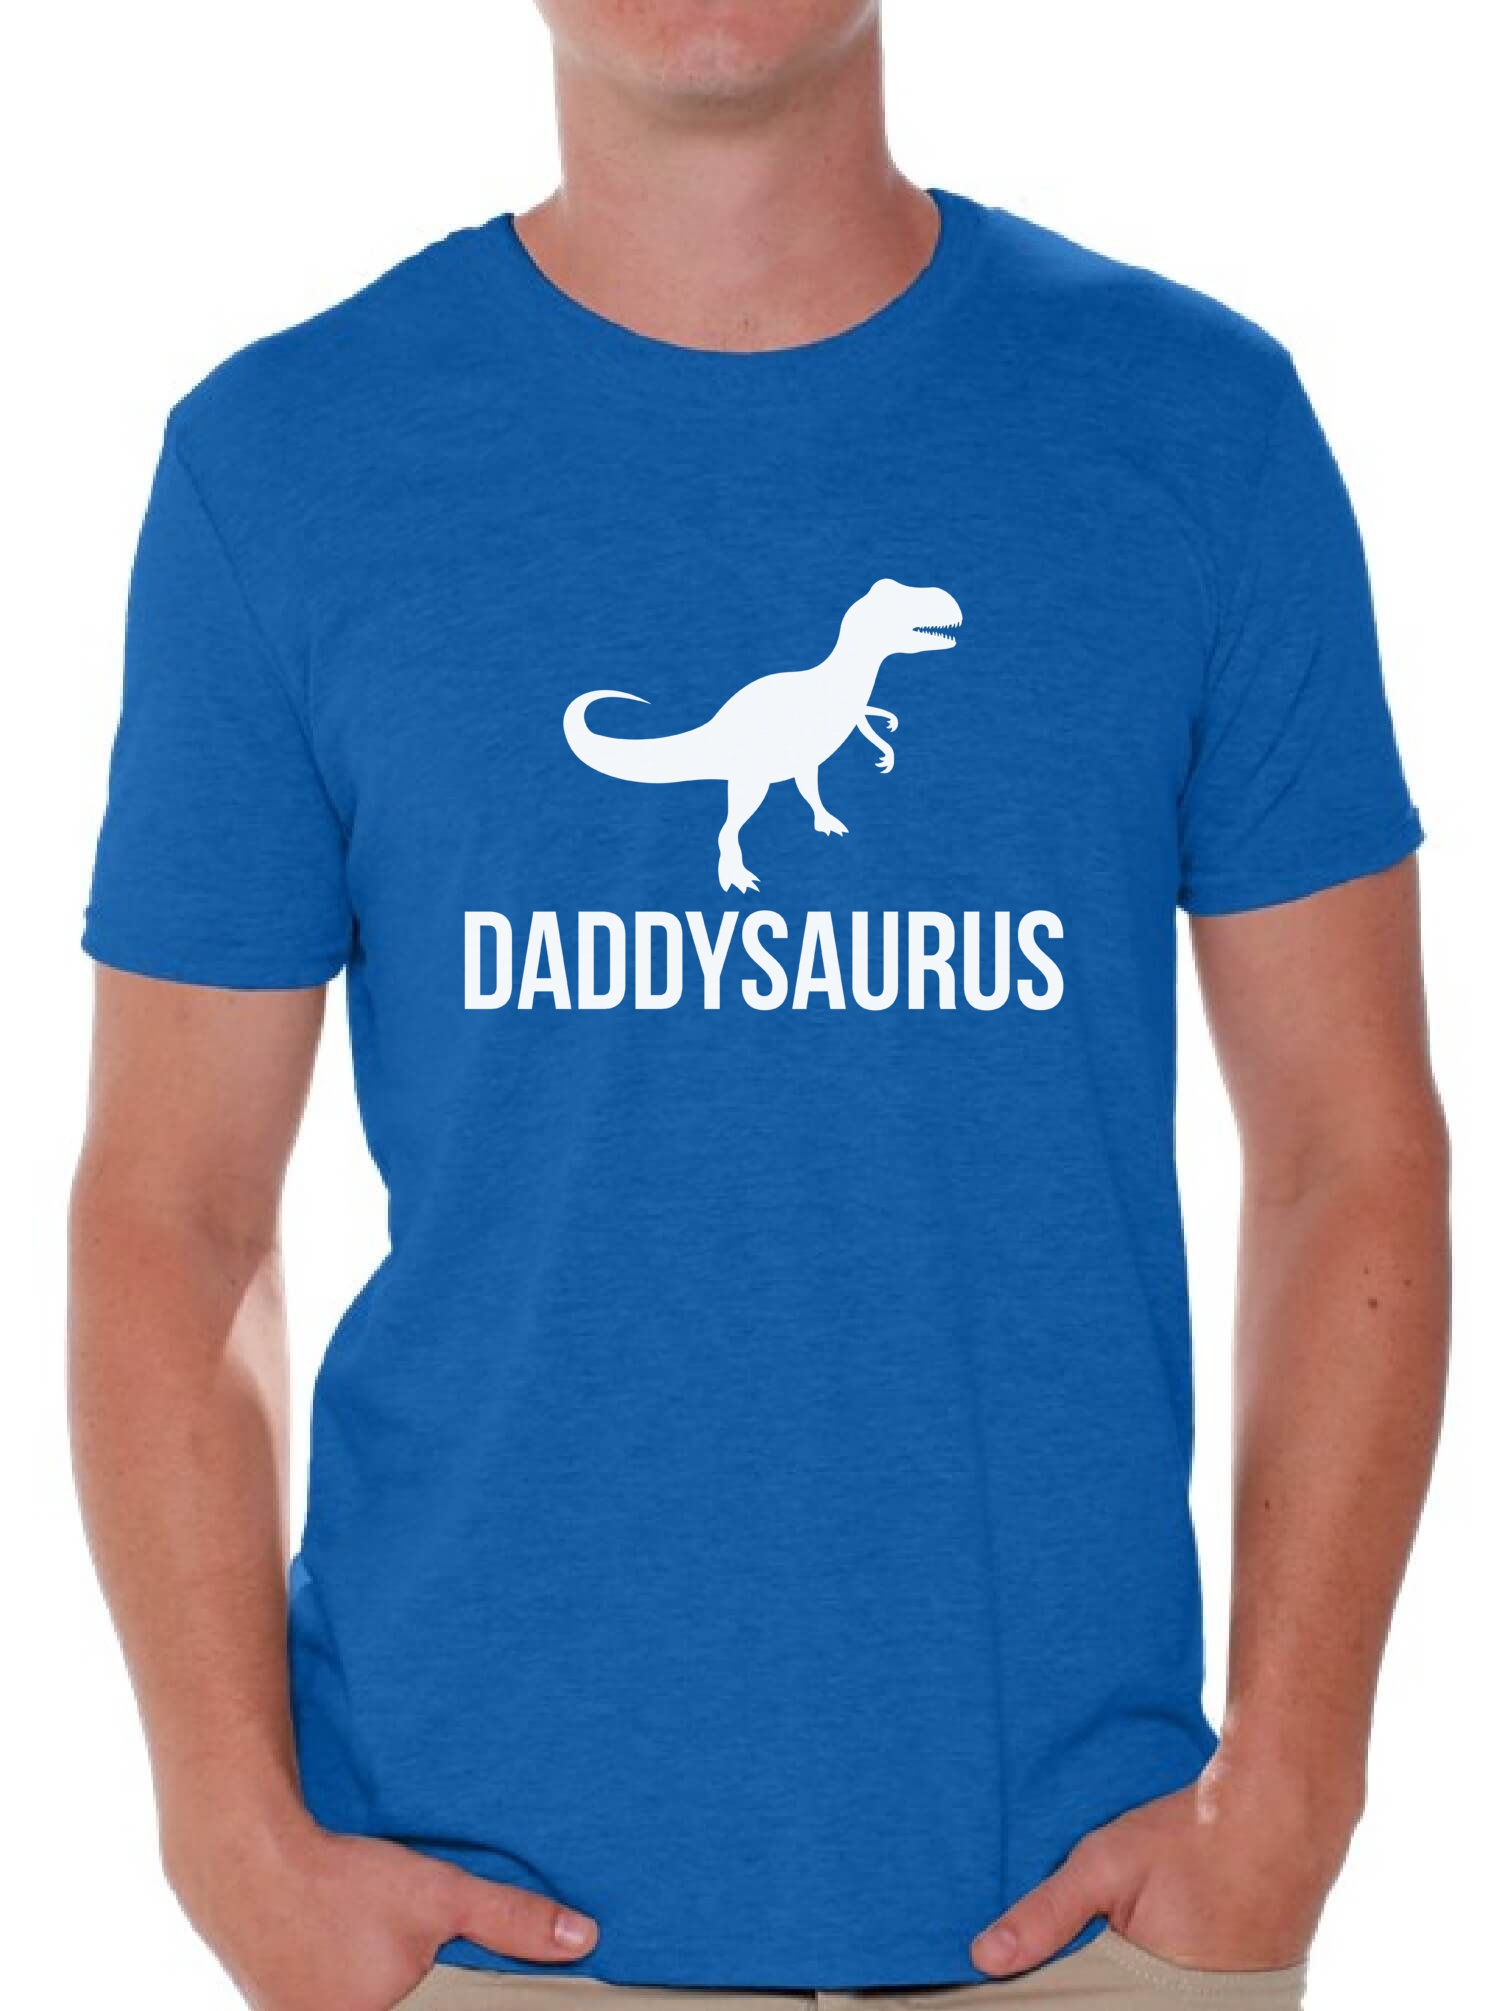 Daddysaurus T shirt Tops Father`s Day Gift Dinosaur Rex Daddy Saur | eBay